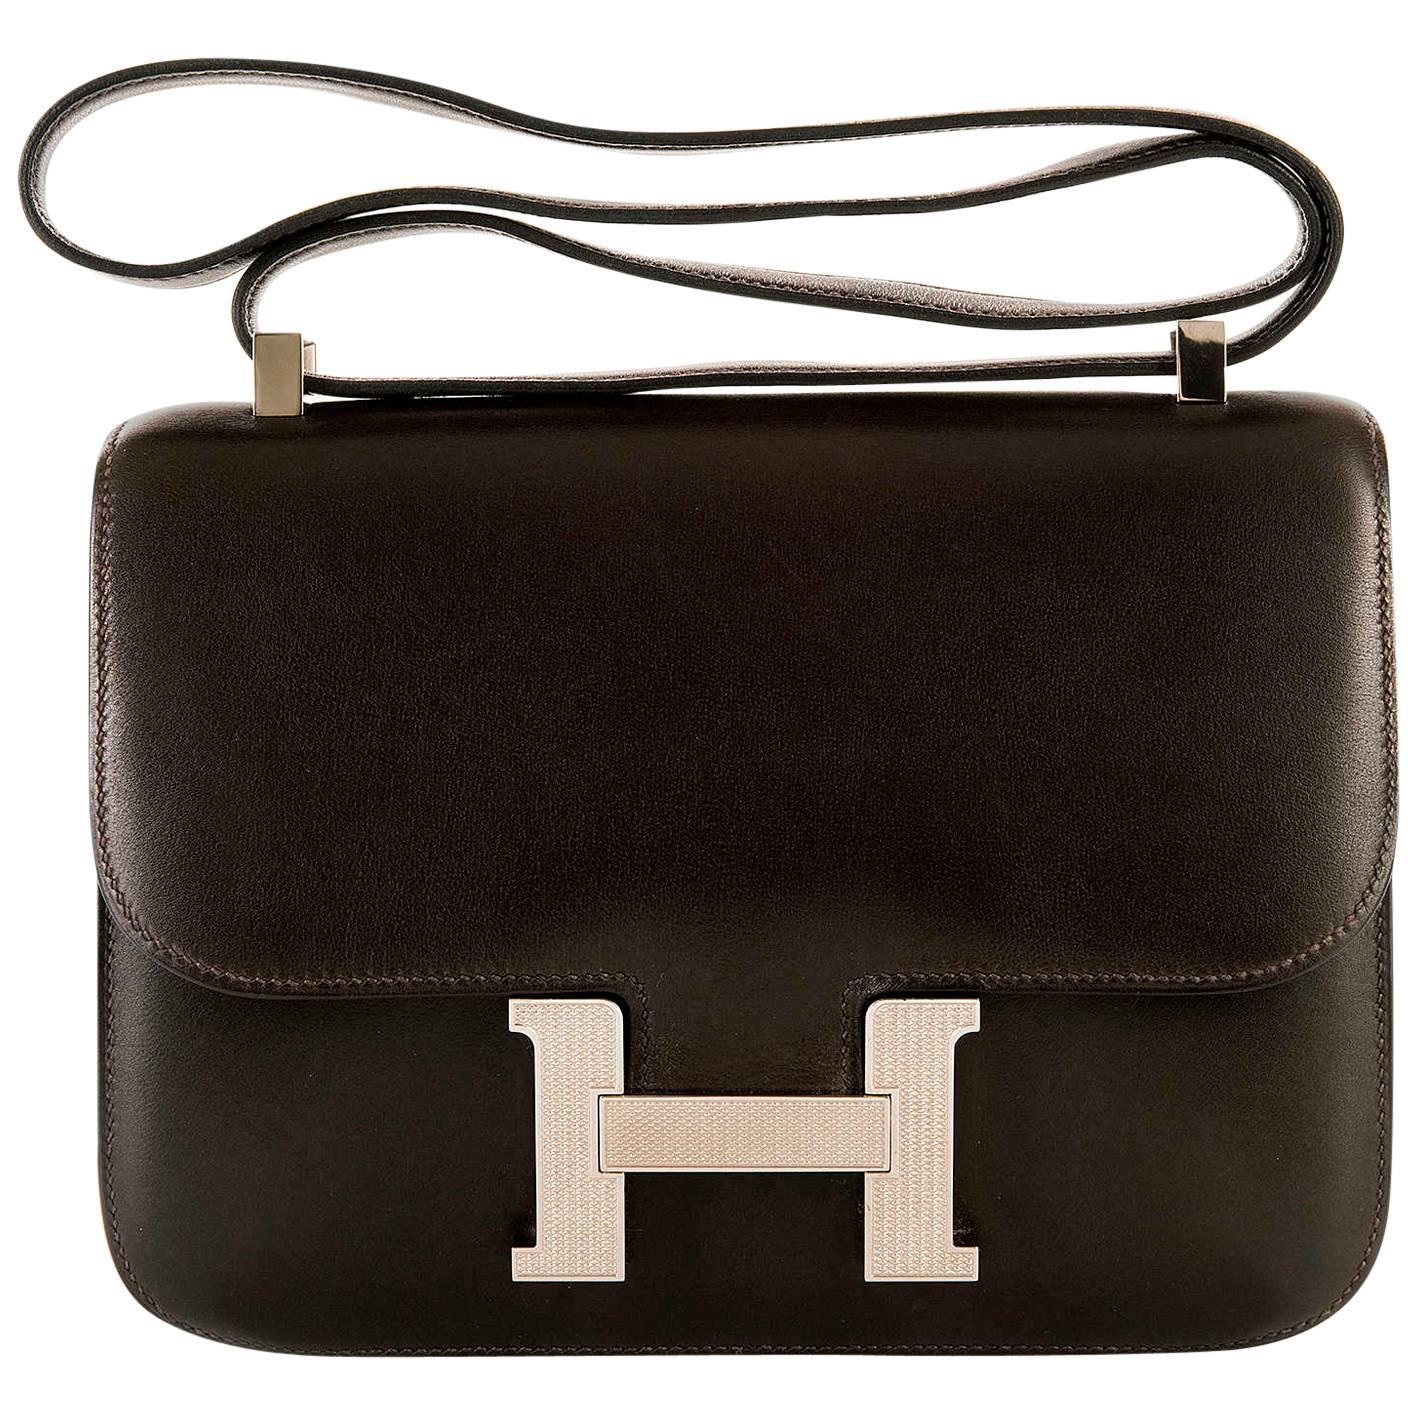  Tres Chic Limited Edition Hermes 23cm Ebene Box Leather Constance Shoulder Bag For Sale